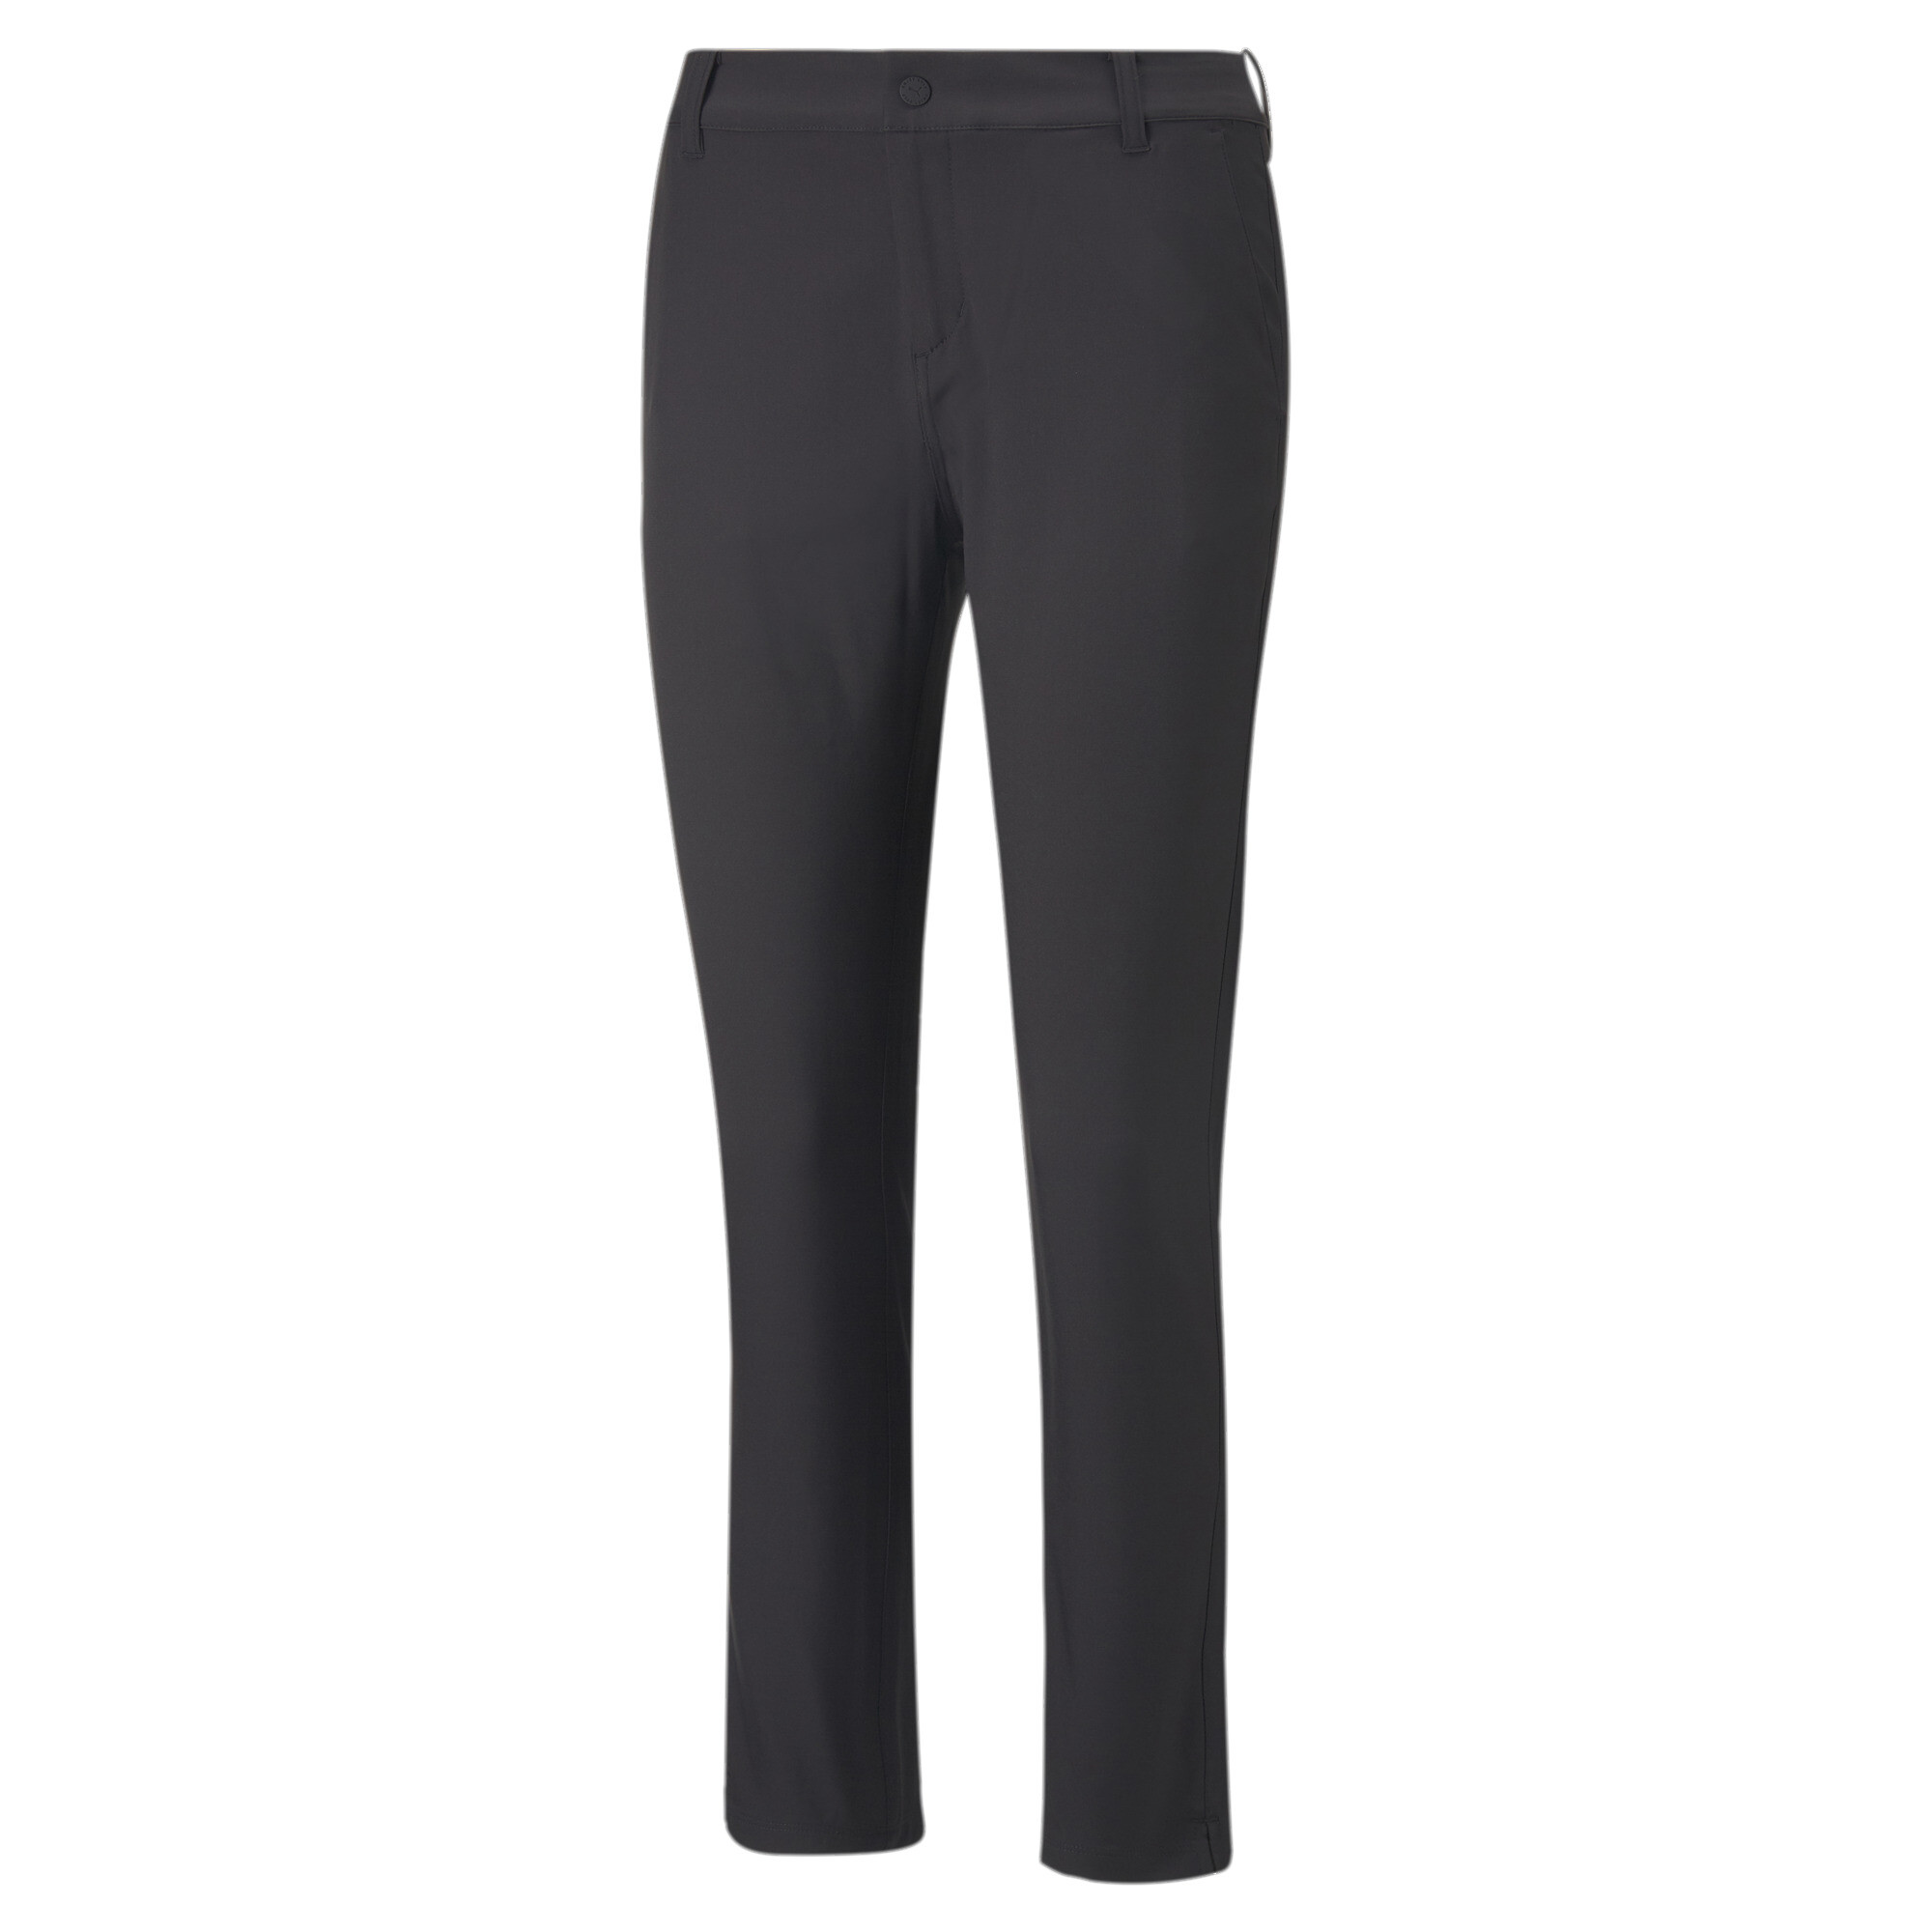 Women's Puma W Boardwalk Golf Pants, Black, Size L, Clothing